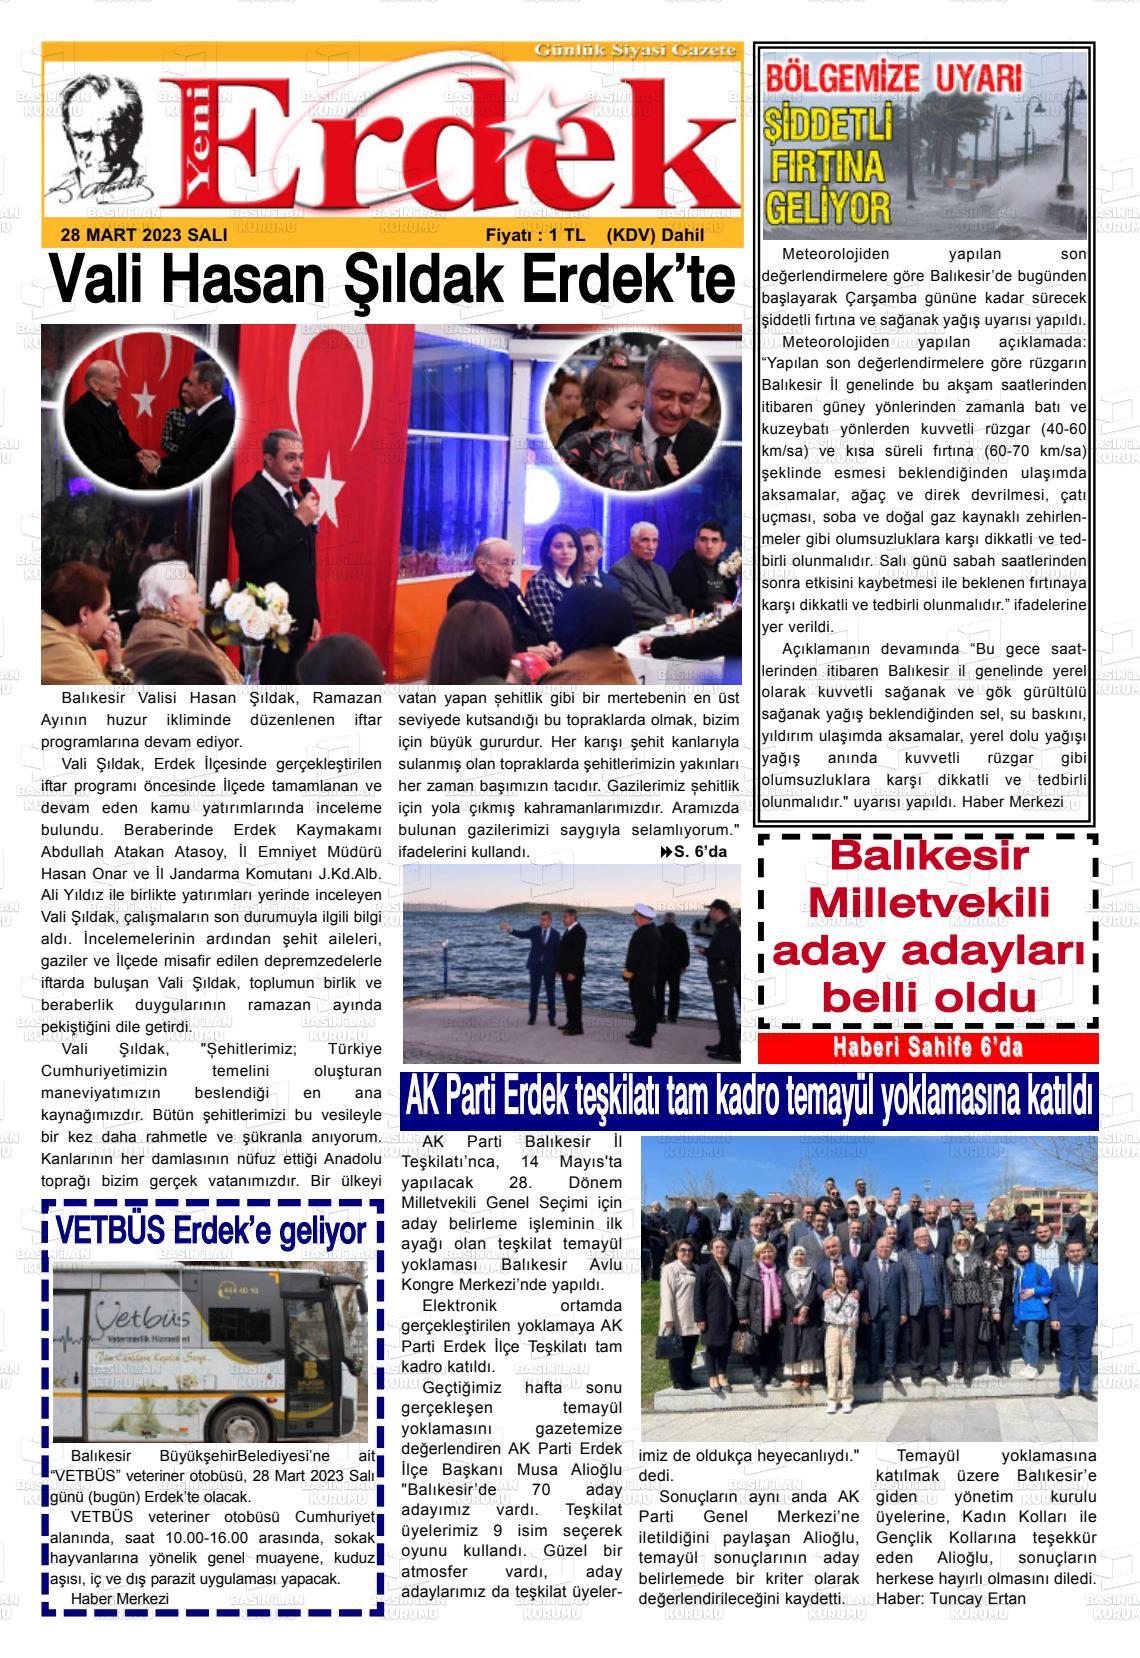 28 Mart 2023 Yeni Erdek Gazete Manşeti